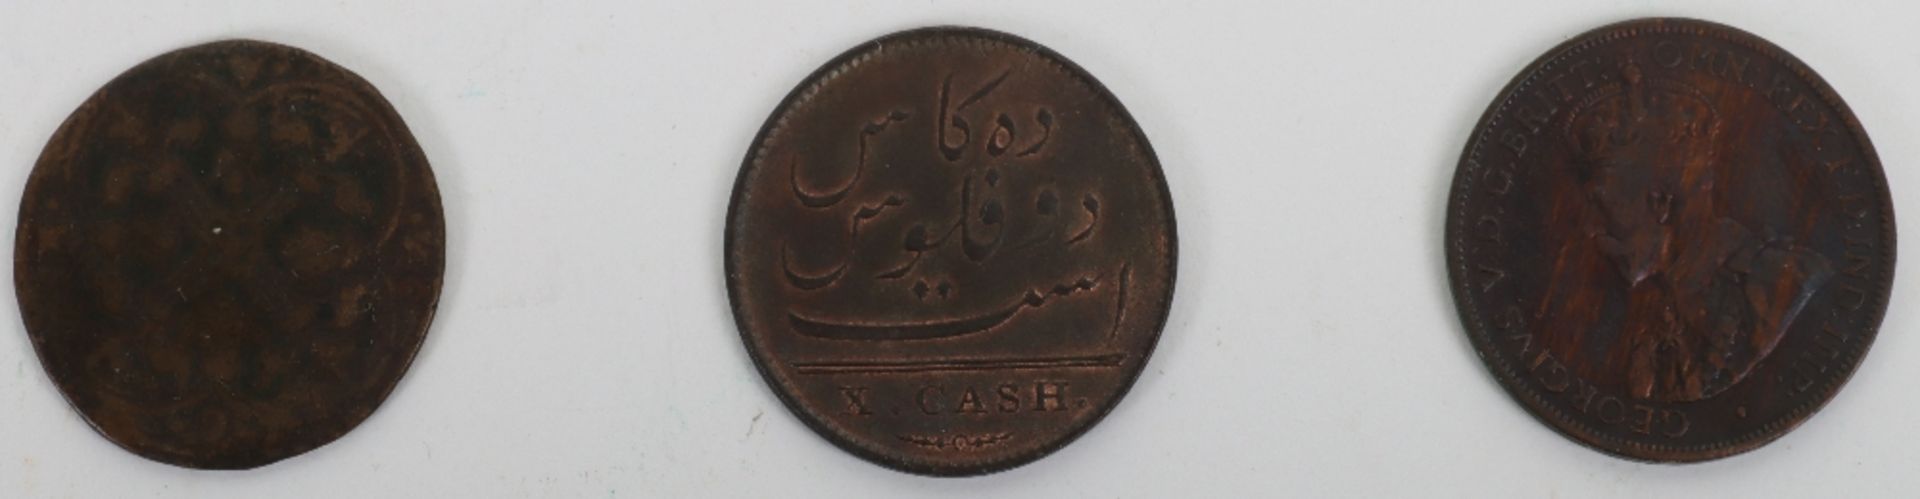 East India Company 1808 10 Cash - Image 2 of 2